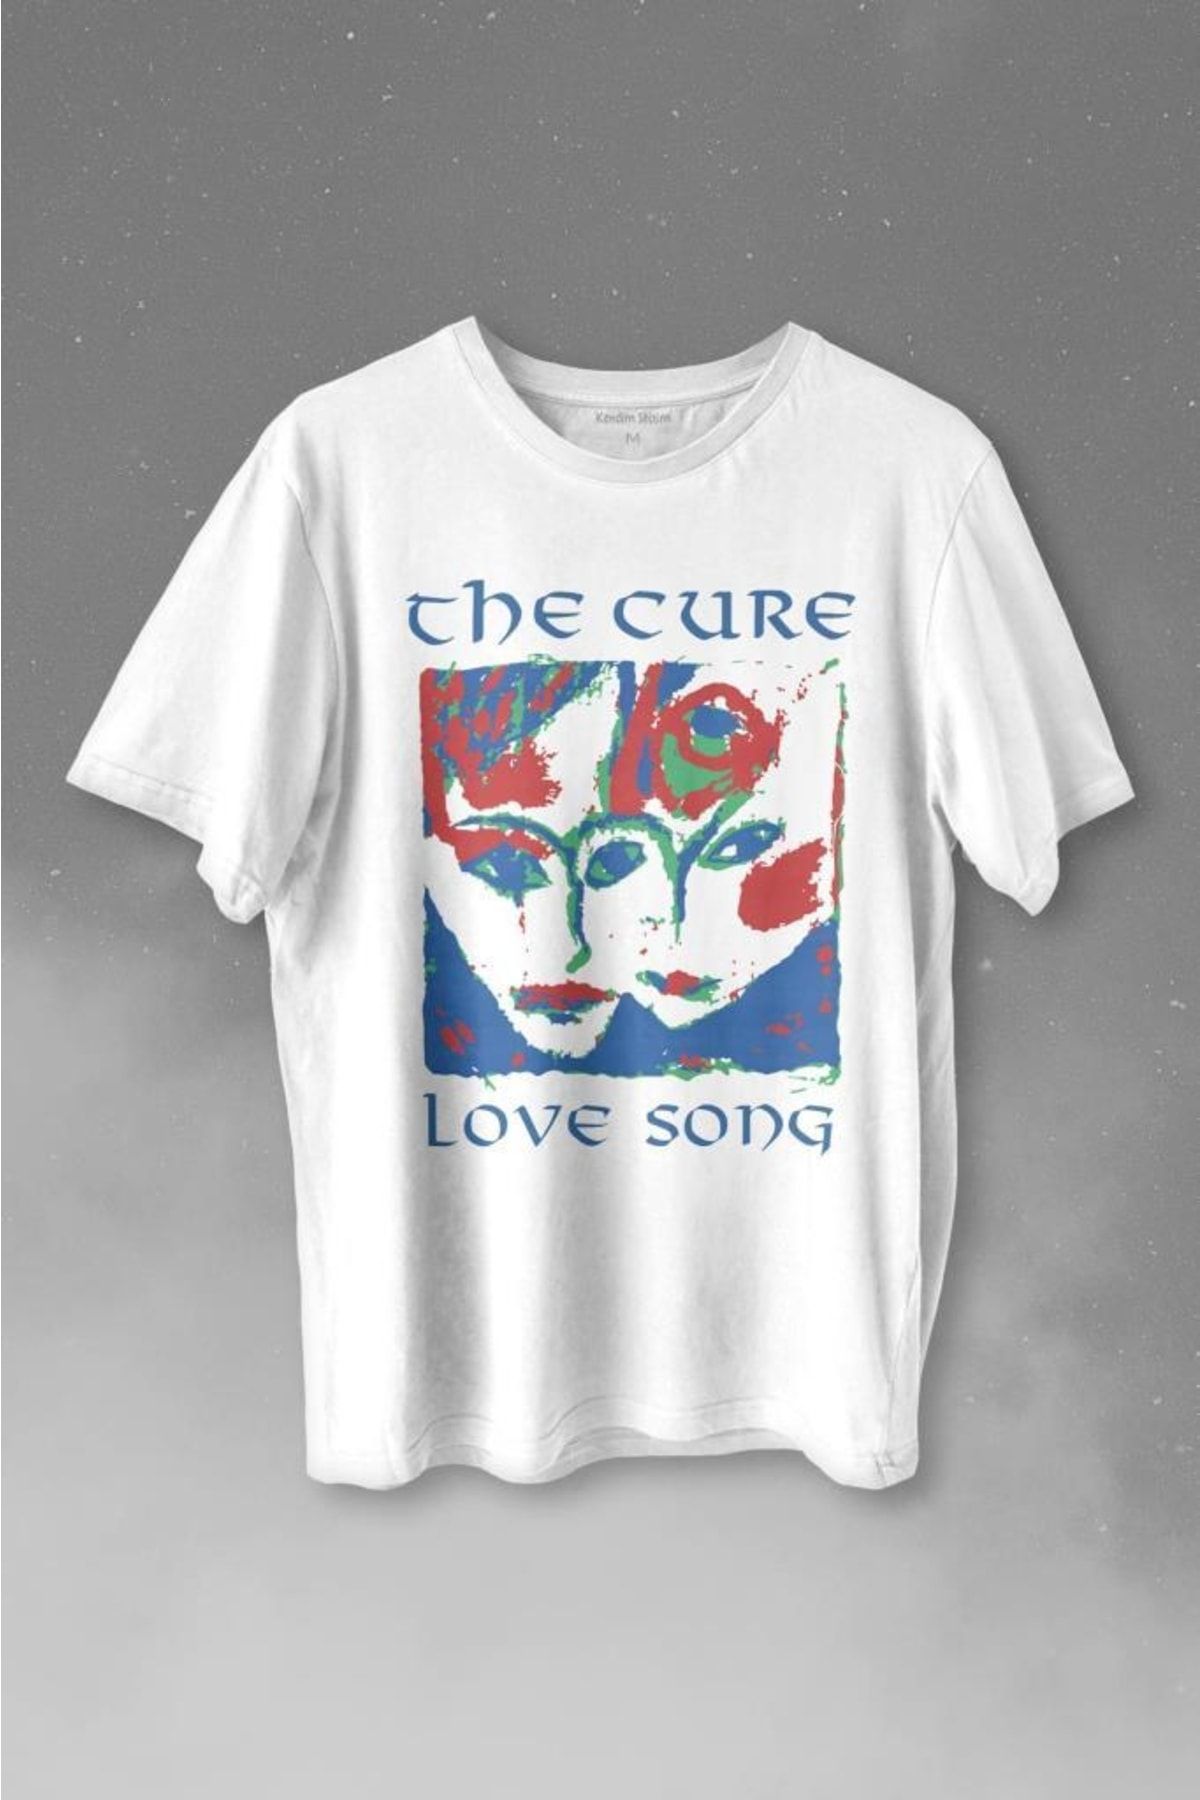 Kendim Seçtim The Cure Lovesong Love Song Rock Music Band Baskılı Tişört Unisex T-shirt